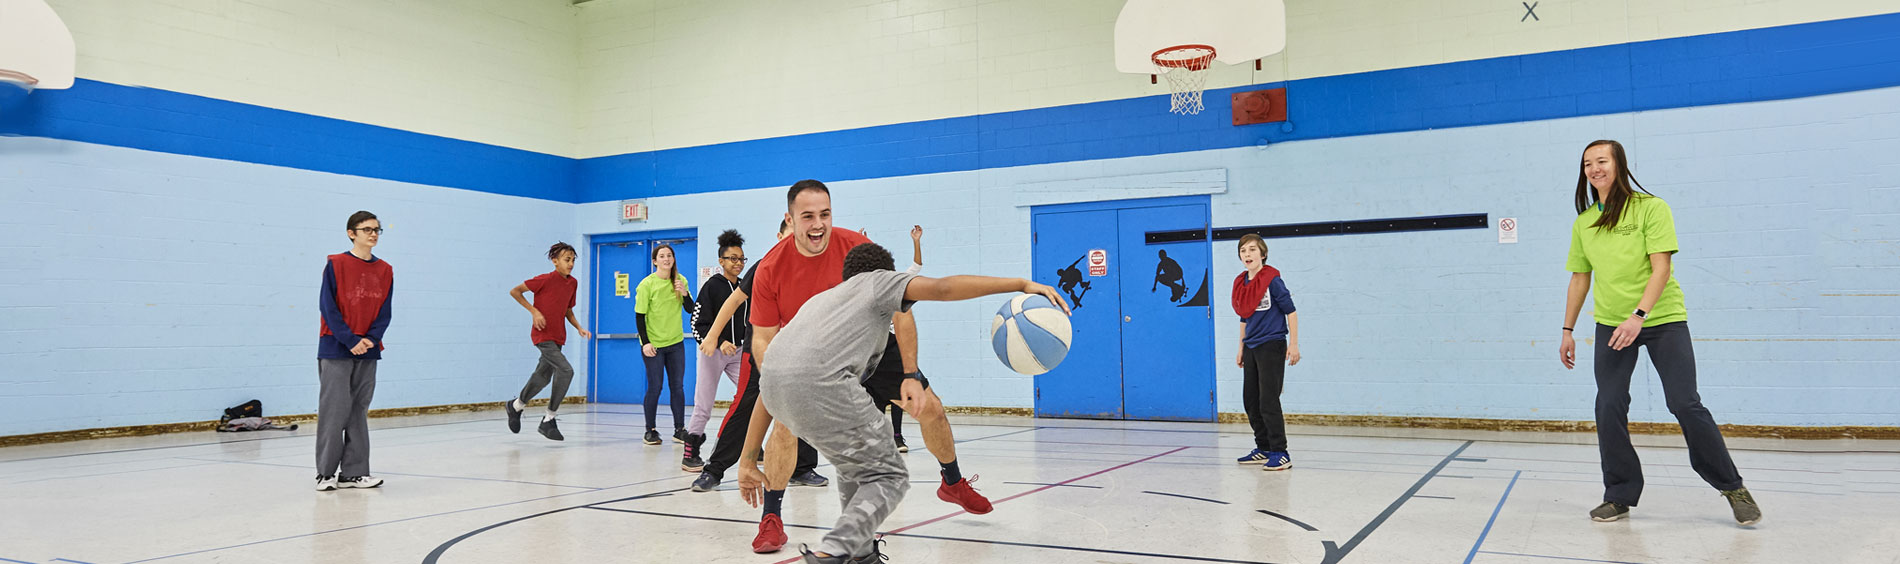 Image of playing basketball at Woodman Community Centre